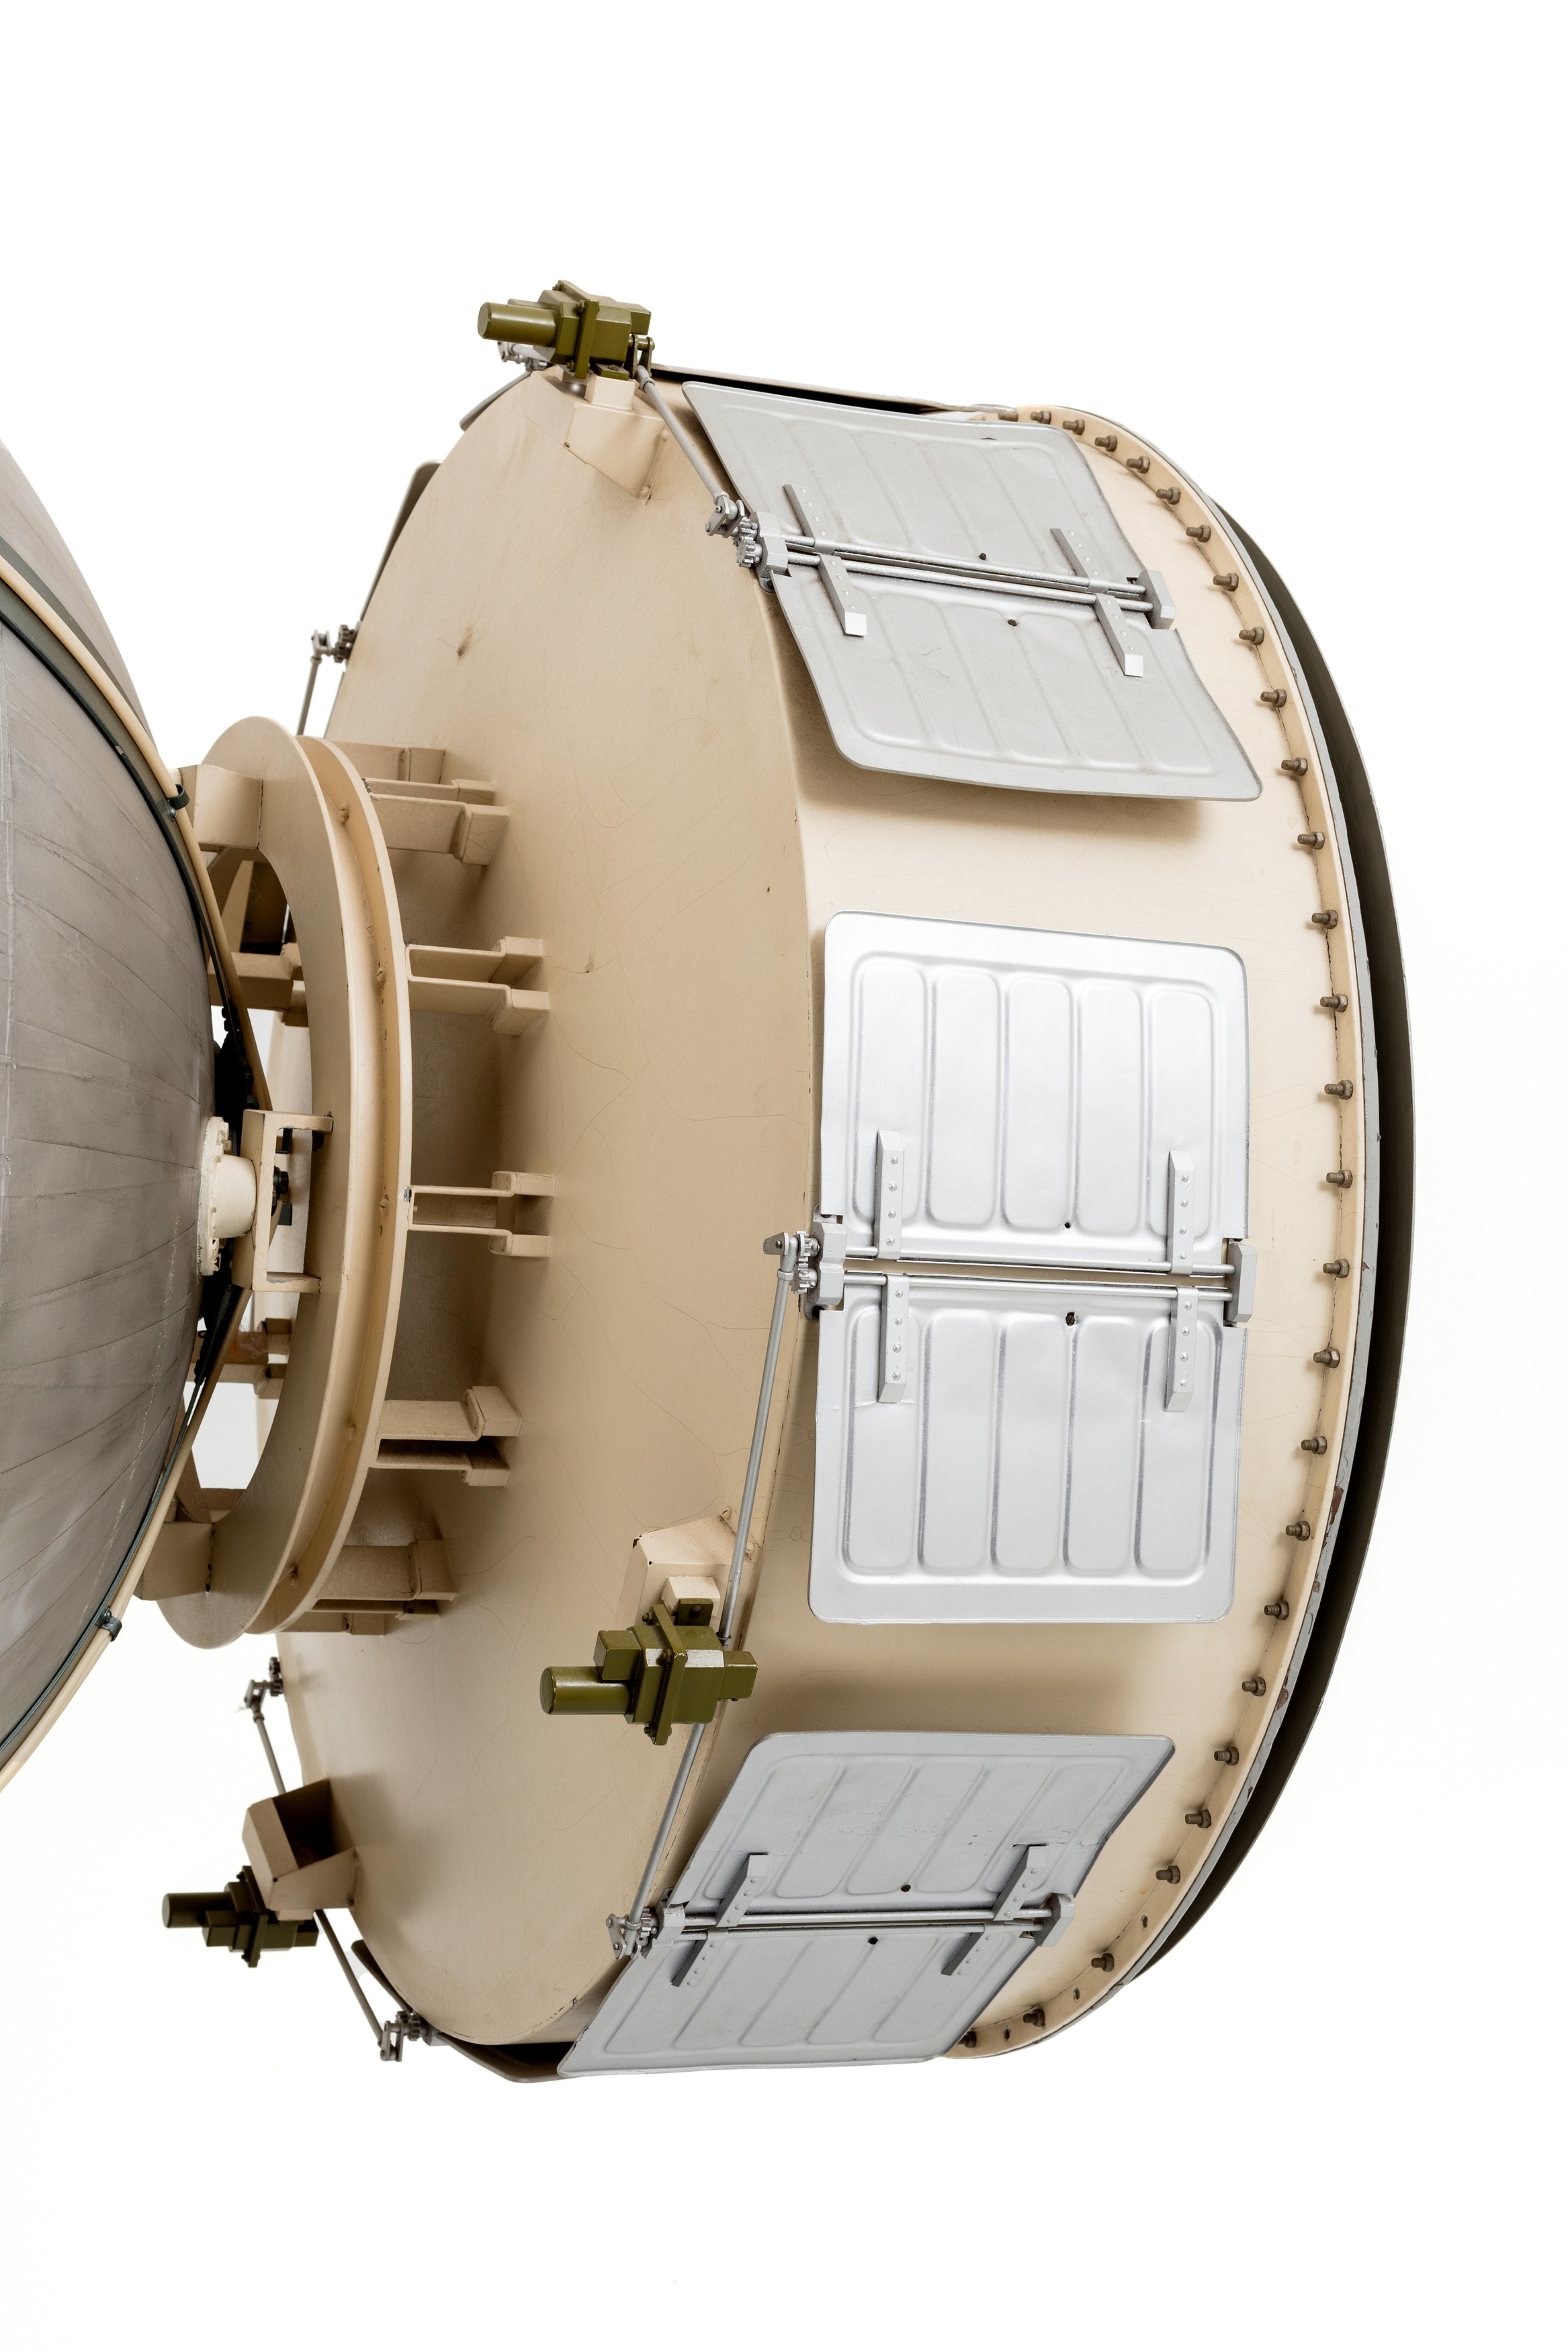 Replica Cosmos-782 (Bion-3) satellite